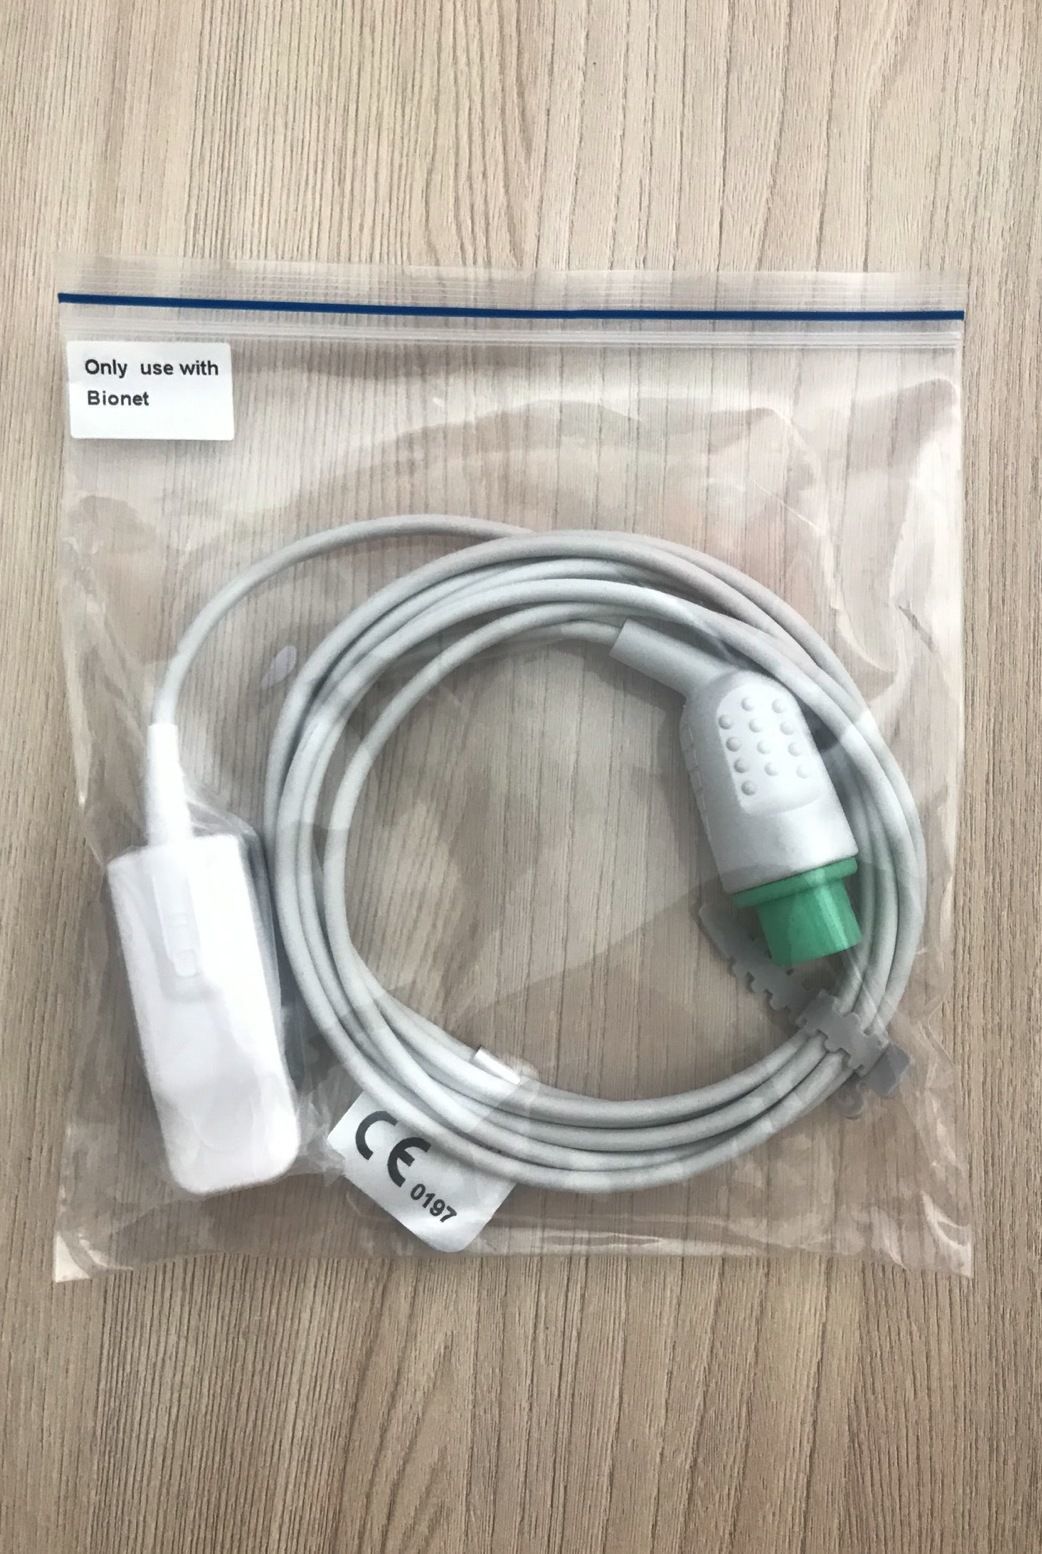 Spo2 Sensor Adult cable for Vital Sign Monitor Bionet & Econet compact5_สายโพรบวัดแซทเครื่องมอนิเตอร์ผู้ป่วย Bionet และ Econet รุ่น Compact 5